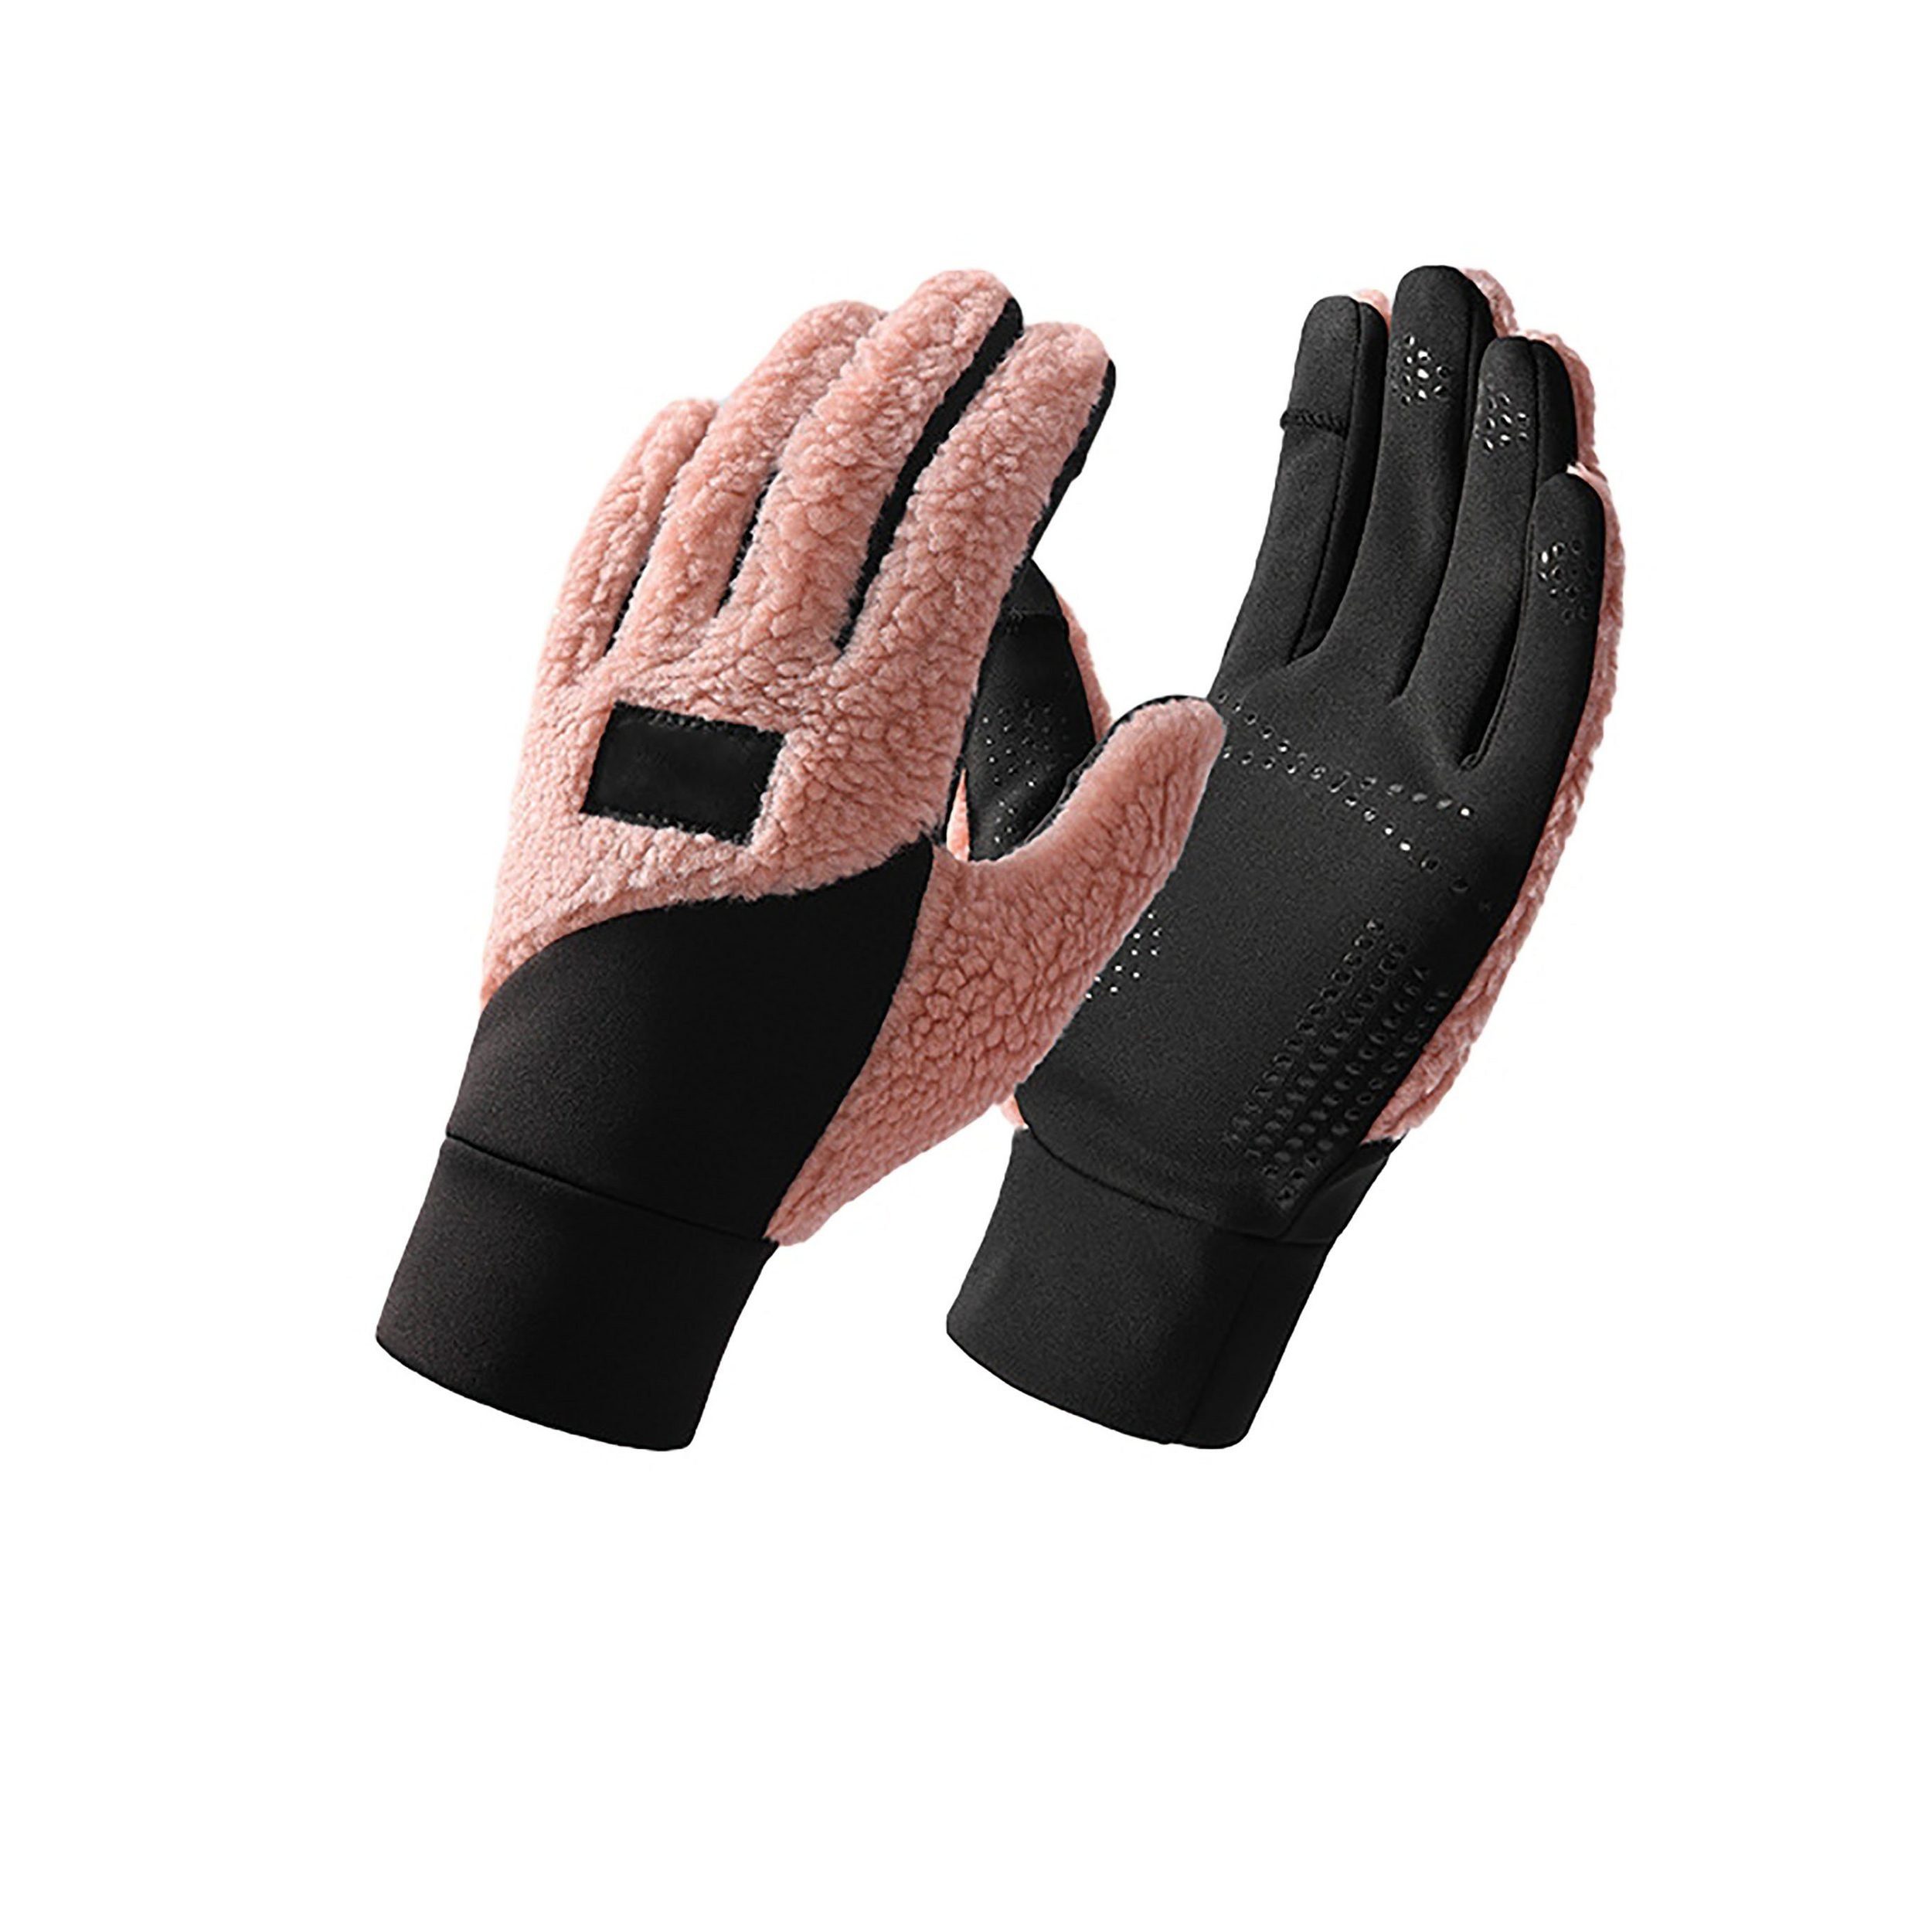 OutdoorSport Handschuhe dickem Strick Skihandschuhe SRRINM aus